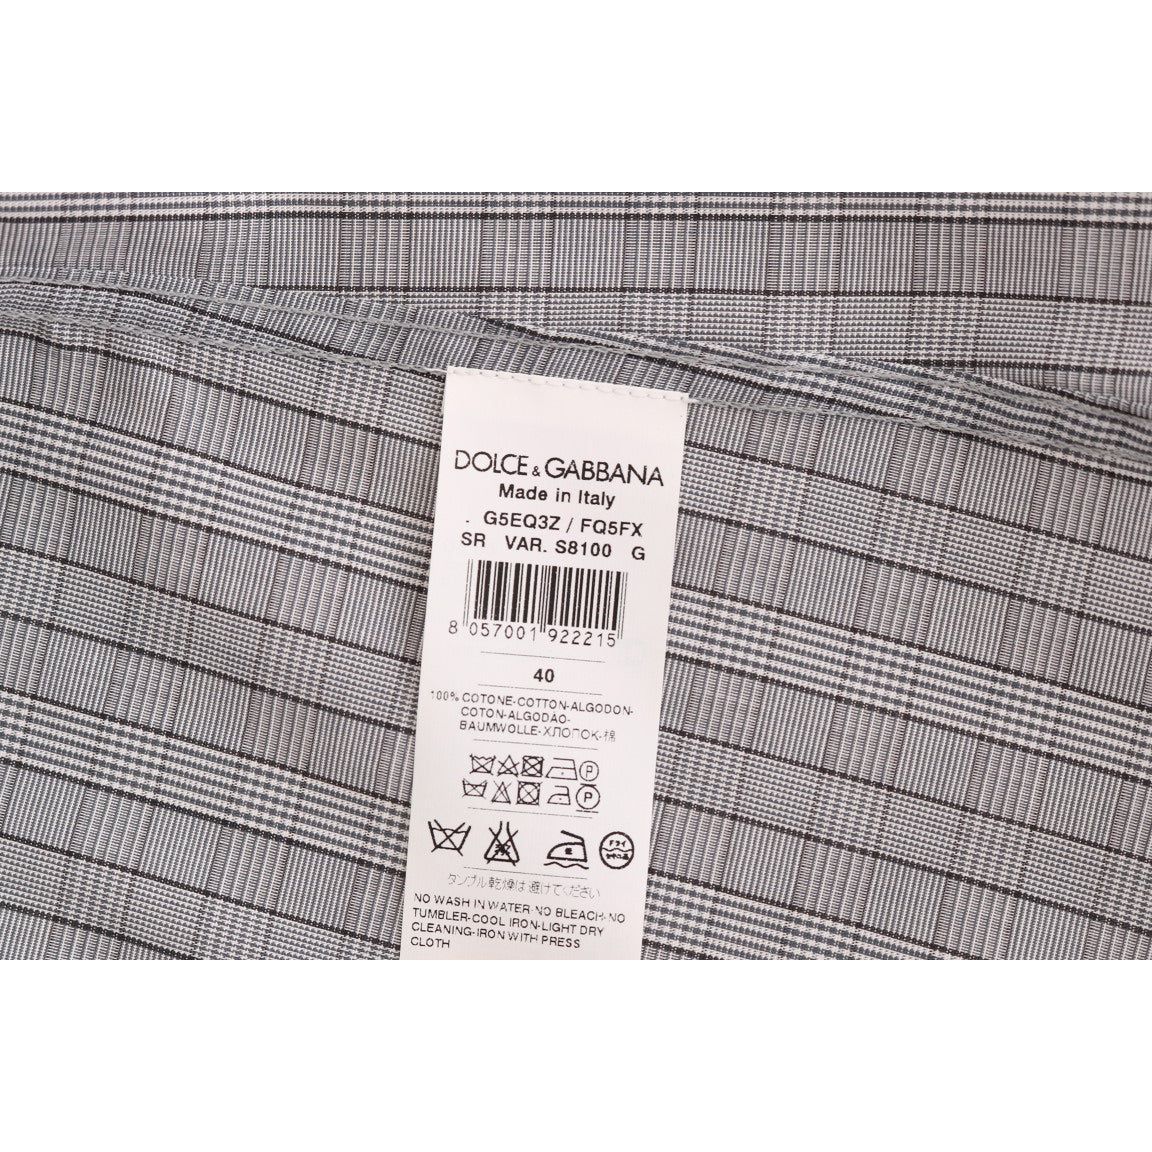 Dolce & Gabbana Elegant Gray Checkered Slim Fit Casual Shirt gray-check-gold-cotton-slim-fit-shirt 517763-gray-check-gold-cotton-slim-fit-shirt-2-7.jpg